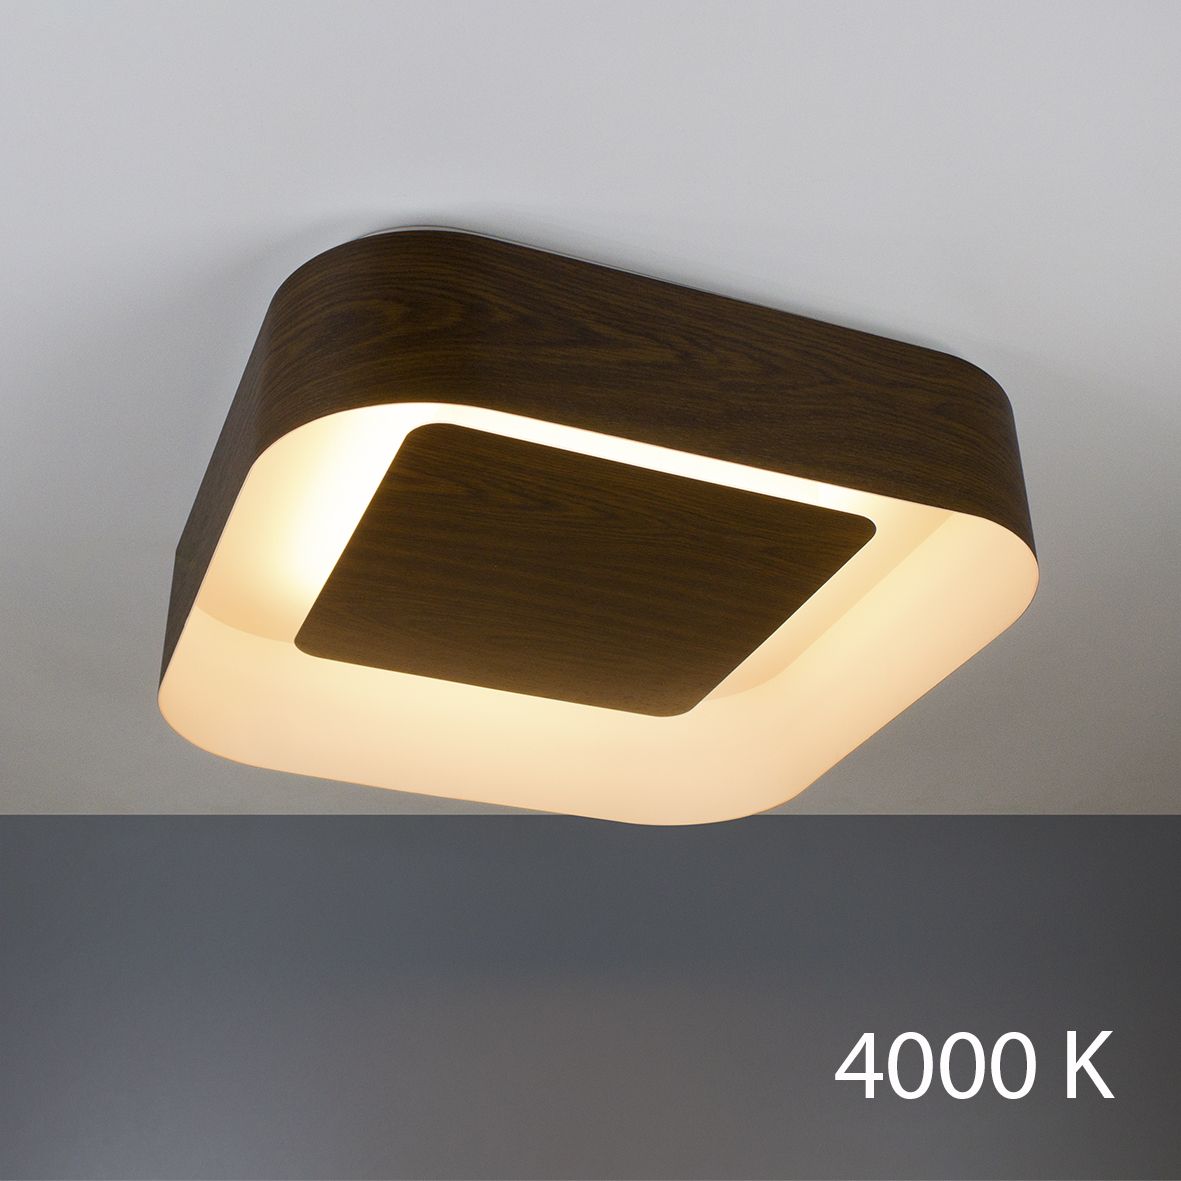 Ceiling lamp Zenith Imperium Light 398165.45.92 brown / white